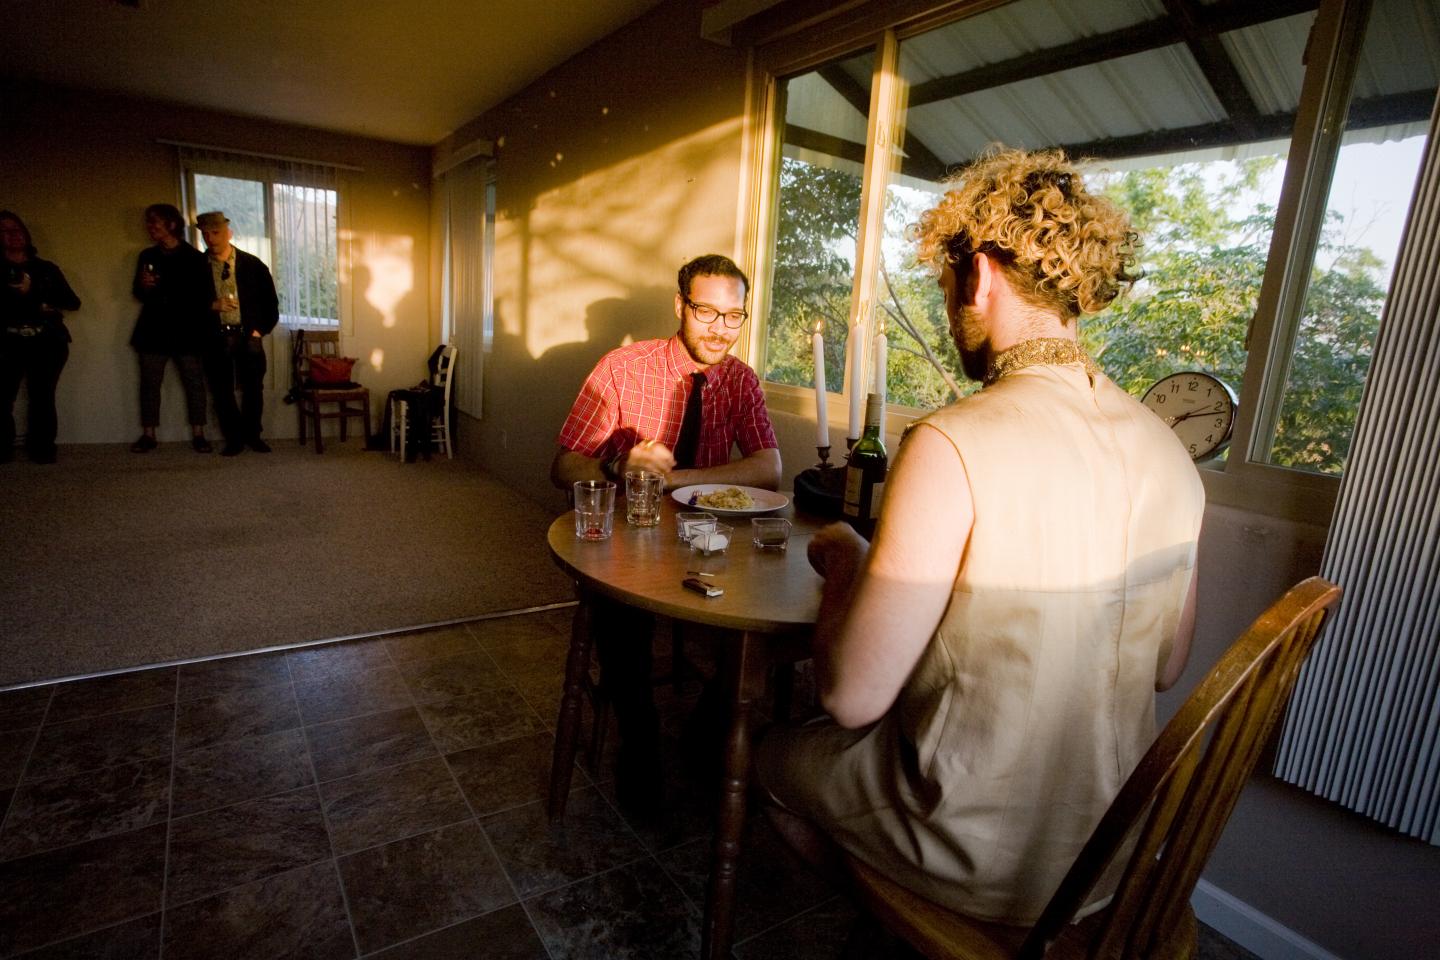 artist having dinner with guest in sunset light